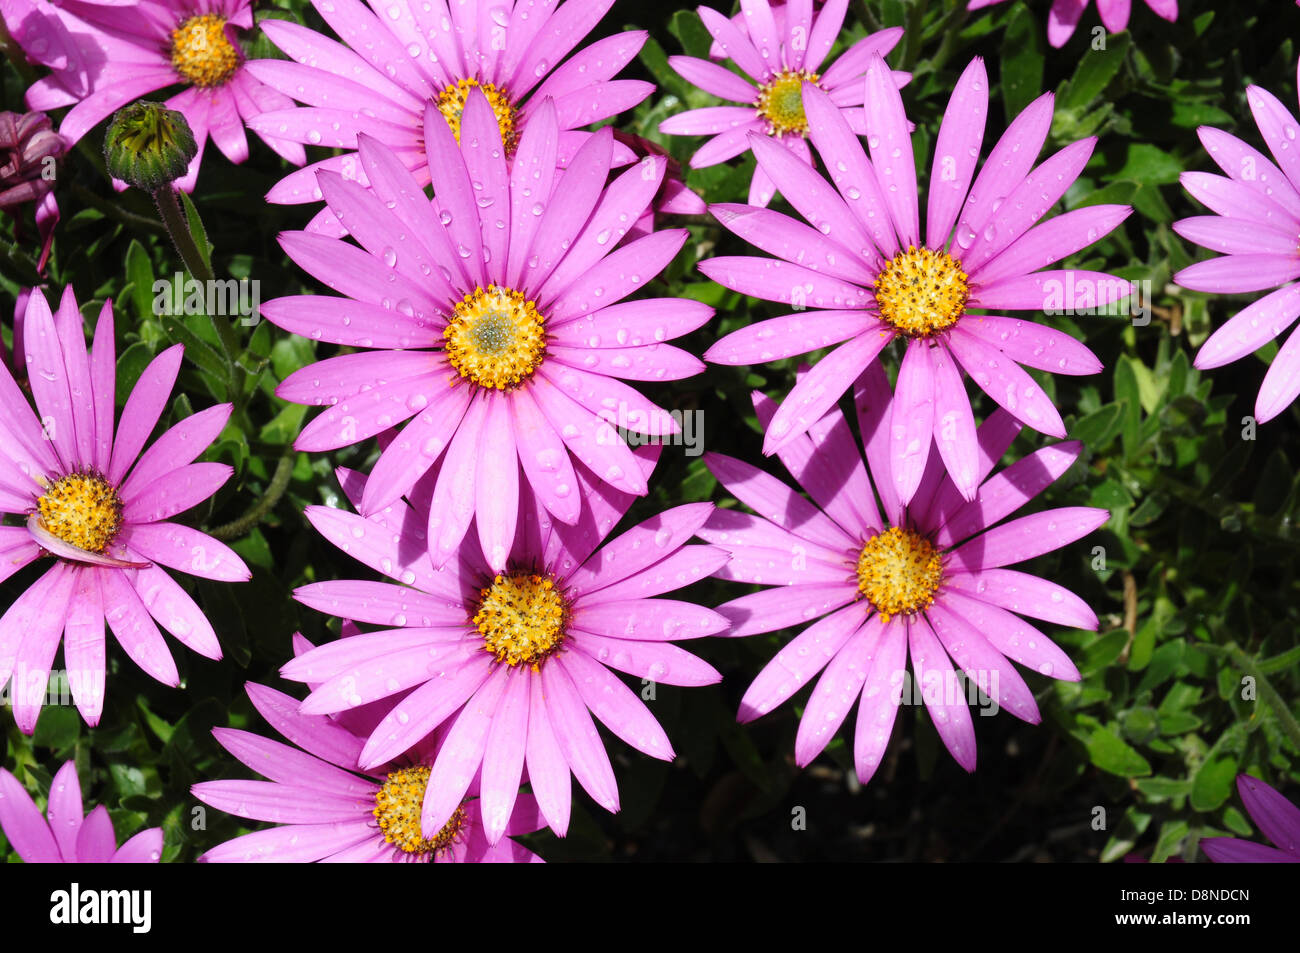 A show of pink daisies. Cape Daisy, Osteospermum jucundum compactum Stock Photo